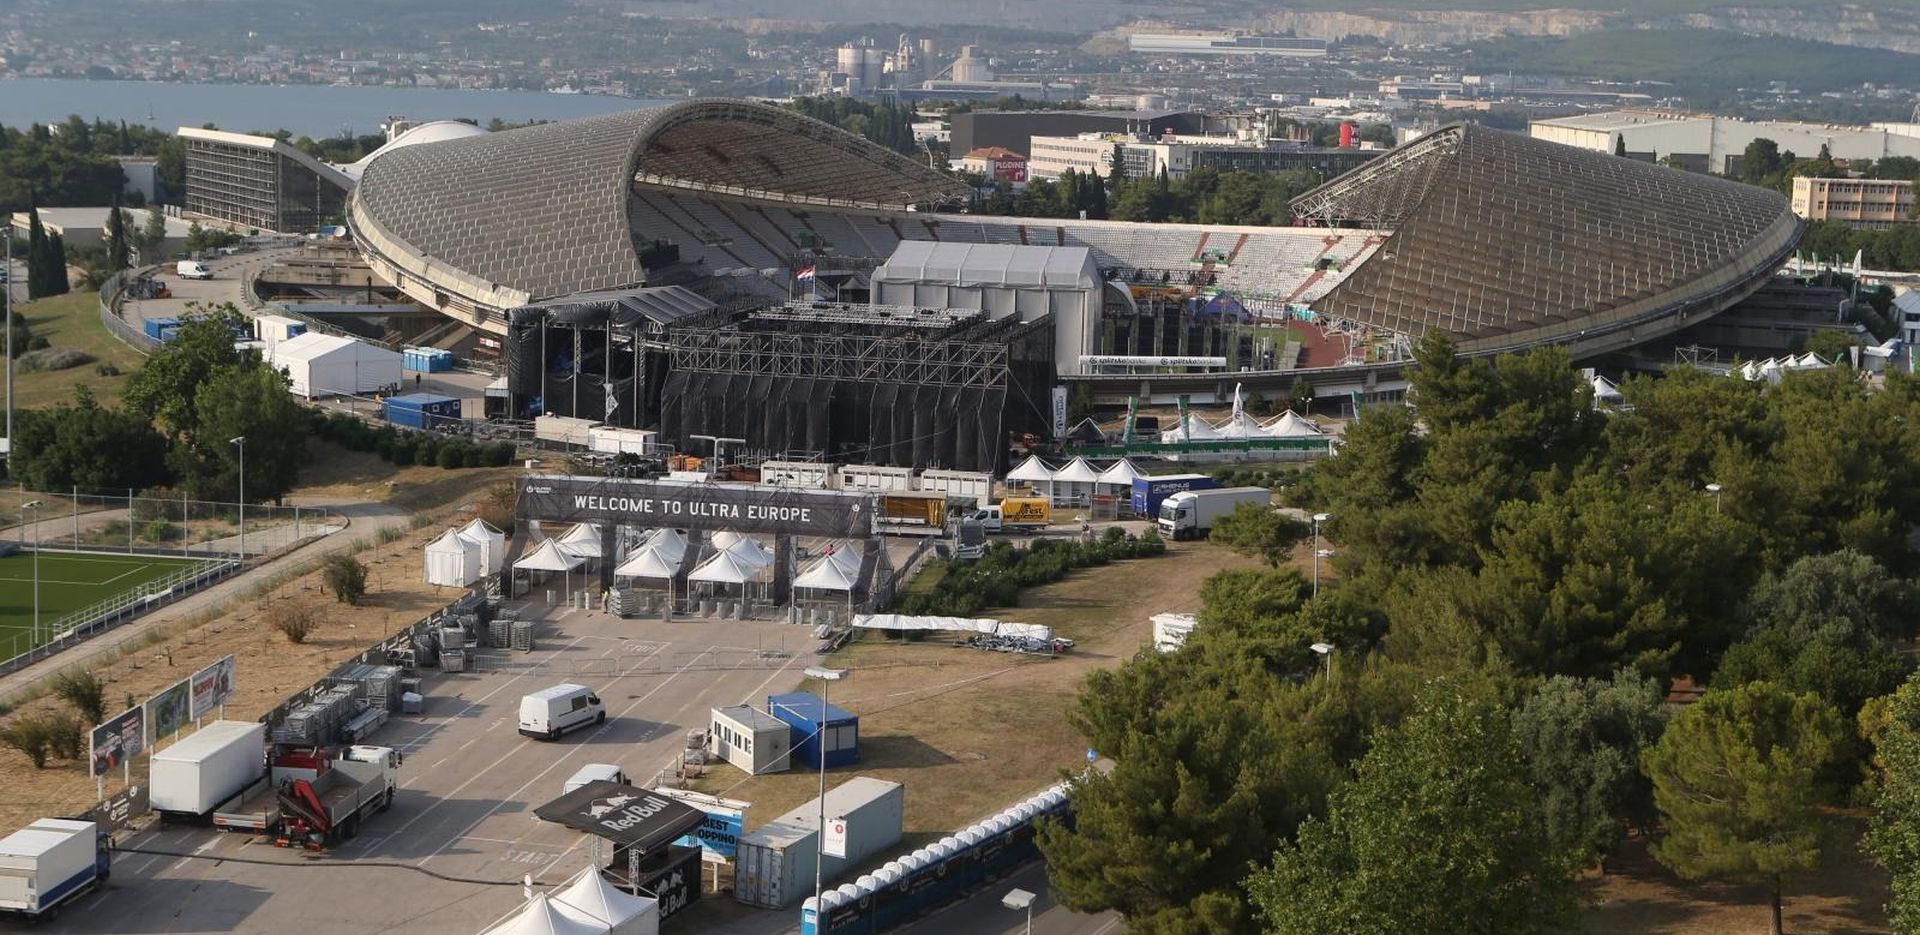 04.07.2018.,Split - Stadion Poljud s priprema se za ULTRA EUROPE 2018 glazbeni spektakl.
Photo: Ivo Cagalj/PIXSELL